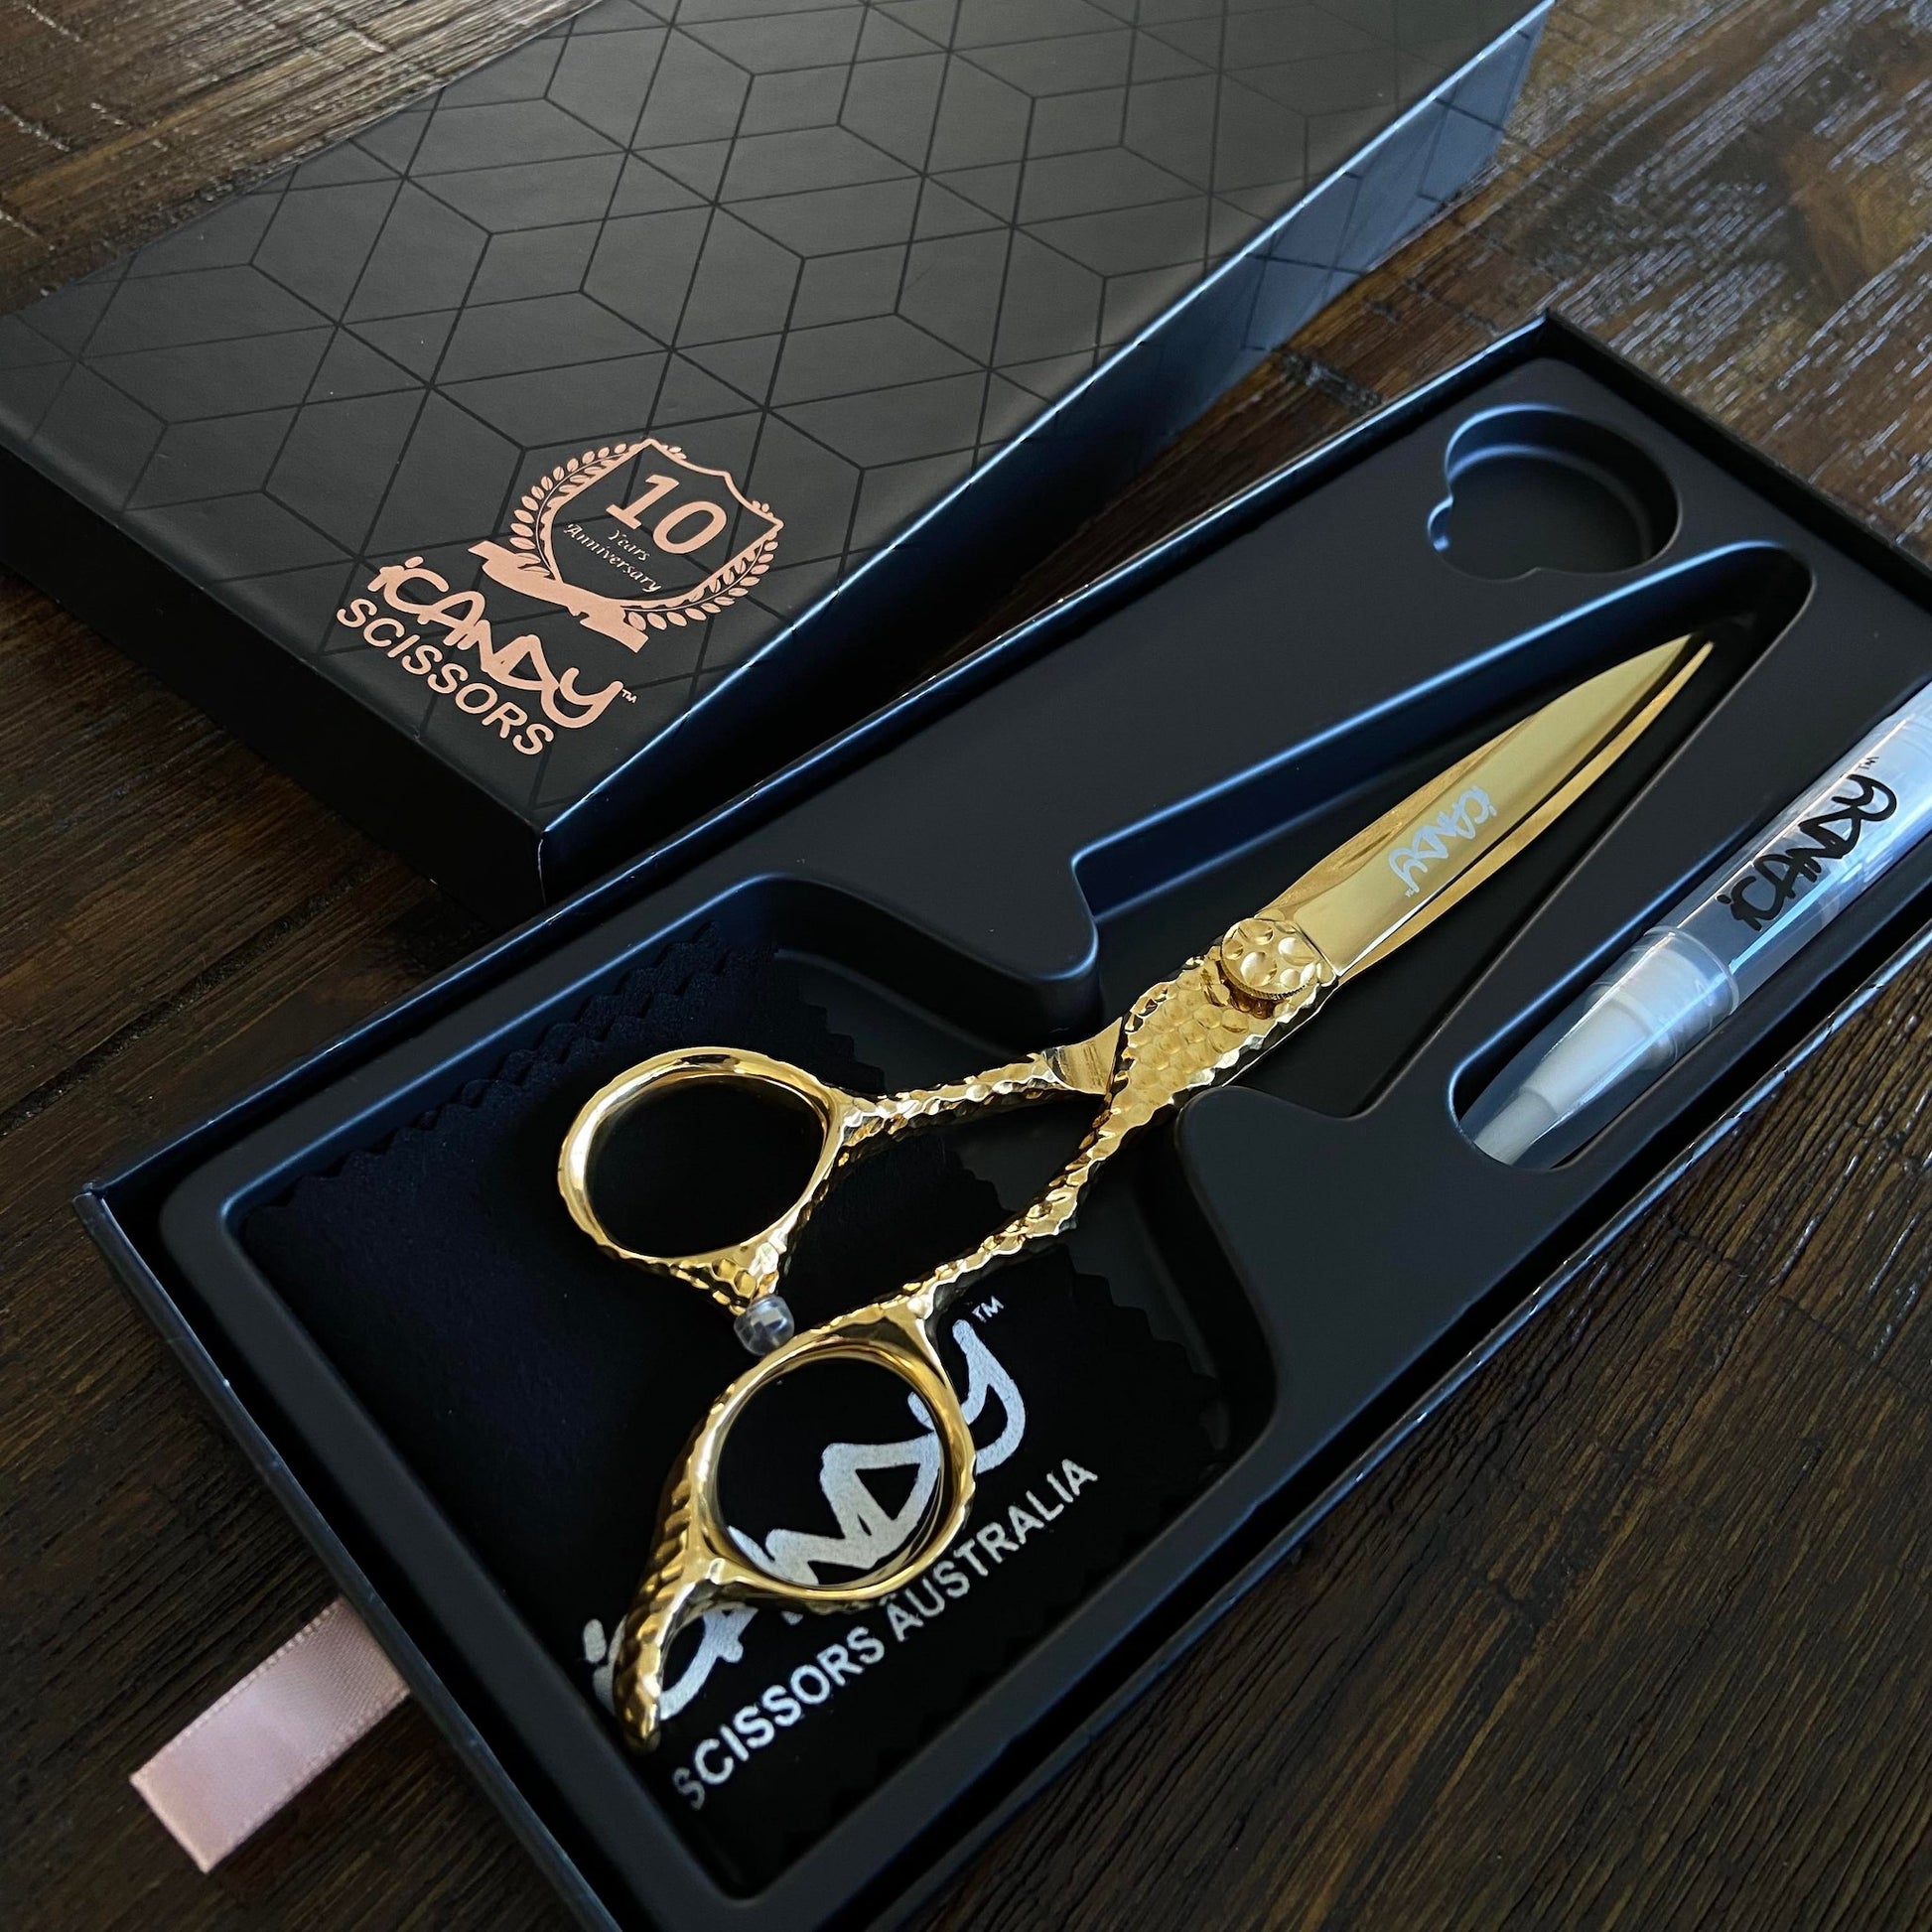 iCandy Sword Pro Yellow Gold VG10 6.6" 10 Years Anniversary Edition Scissors Open Box